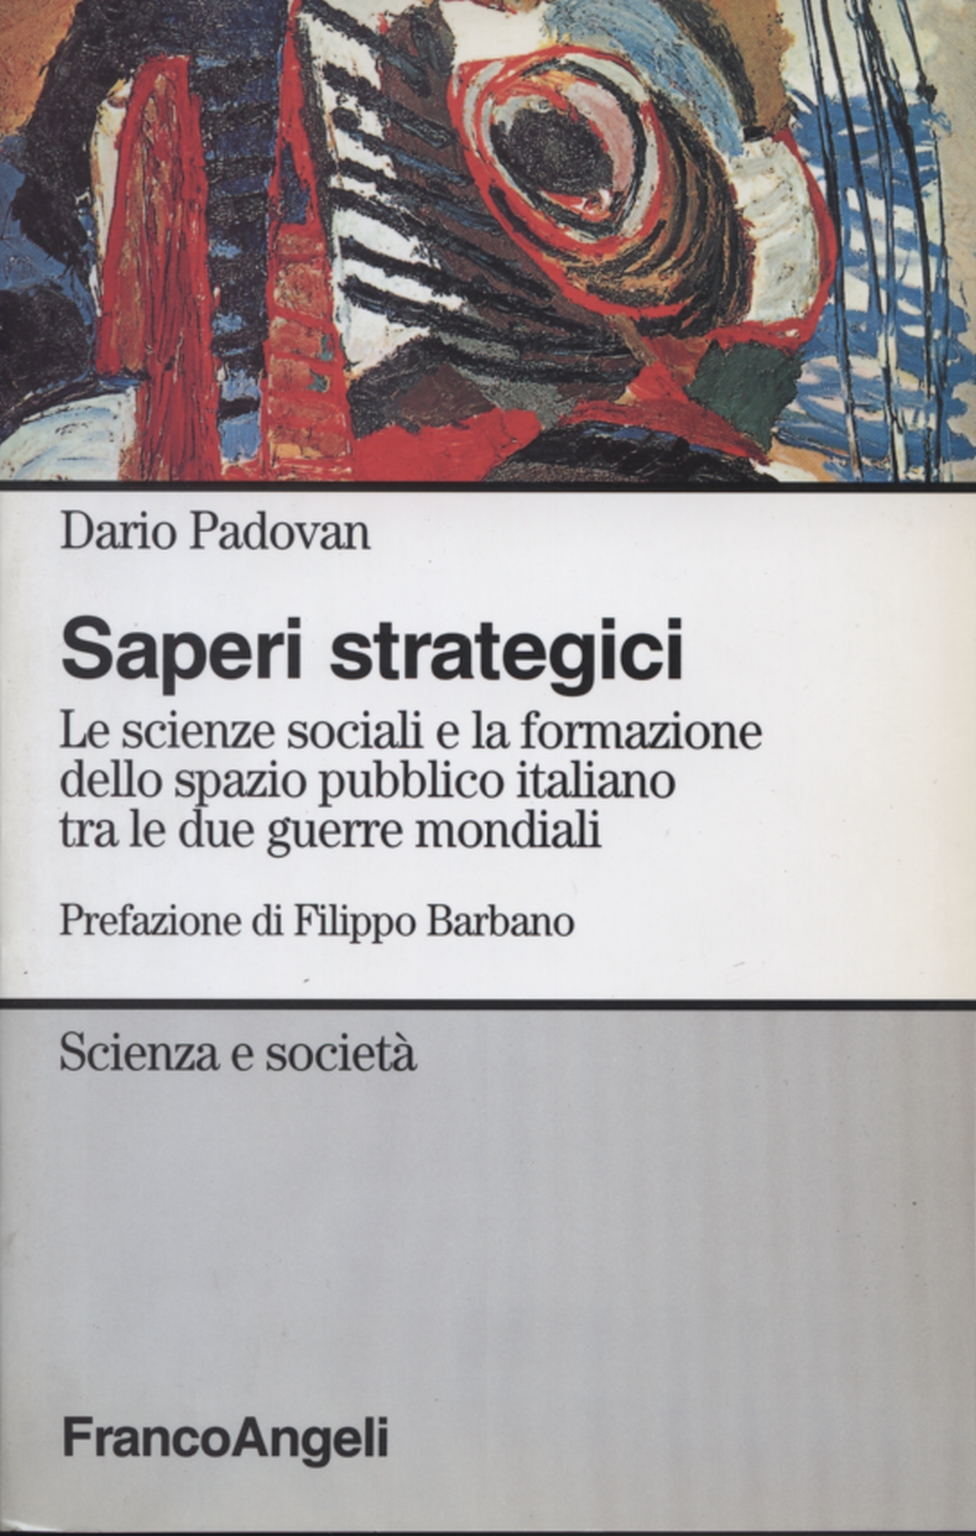 Saperi strategici, Dario Padovan